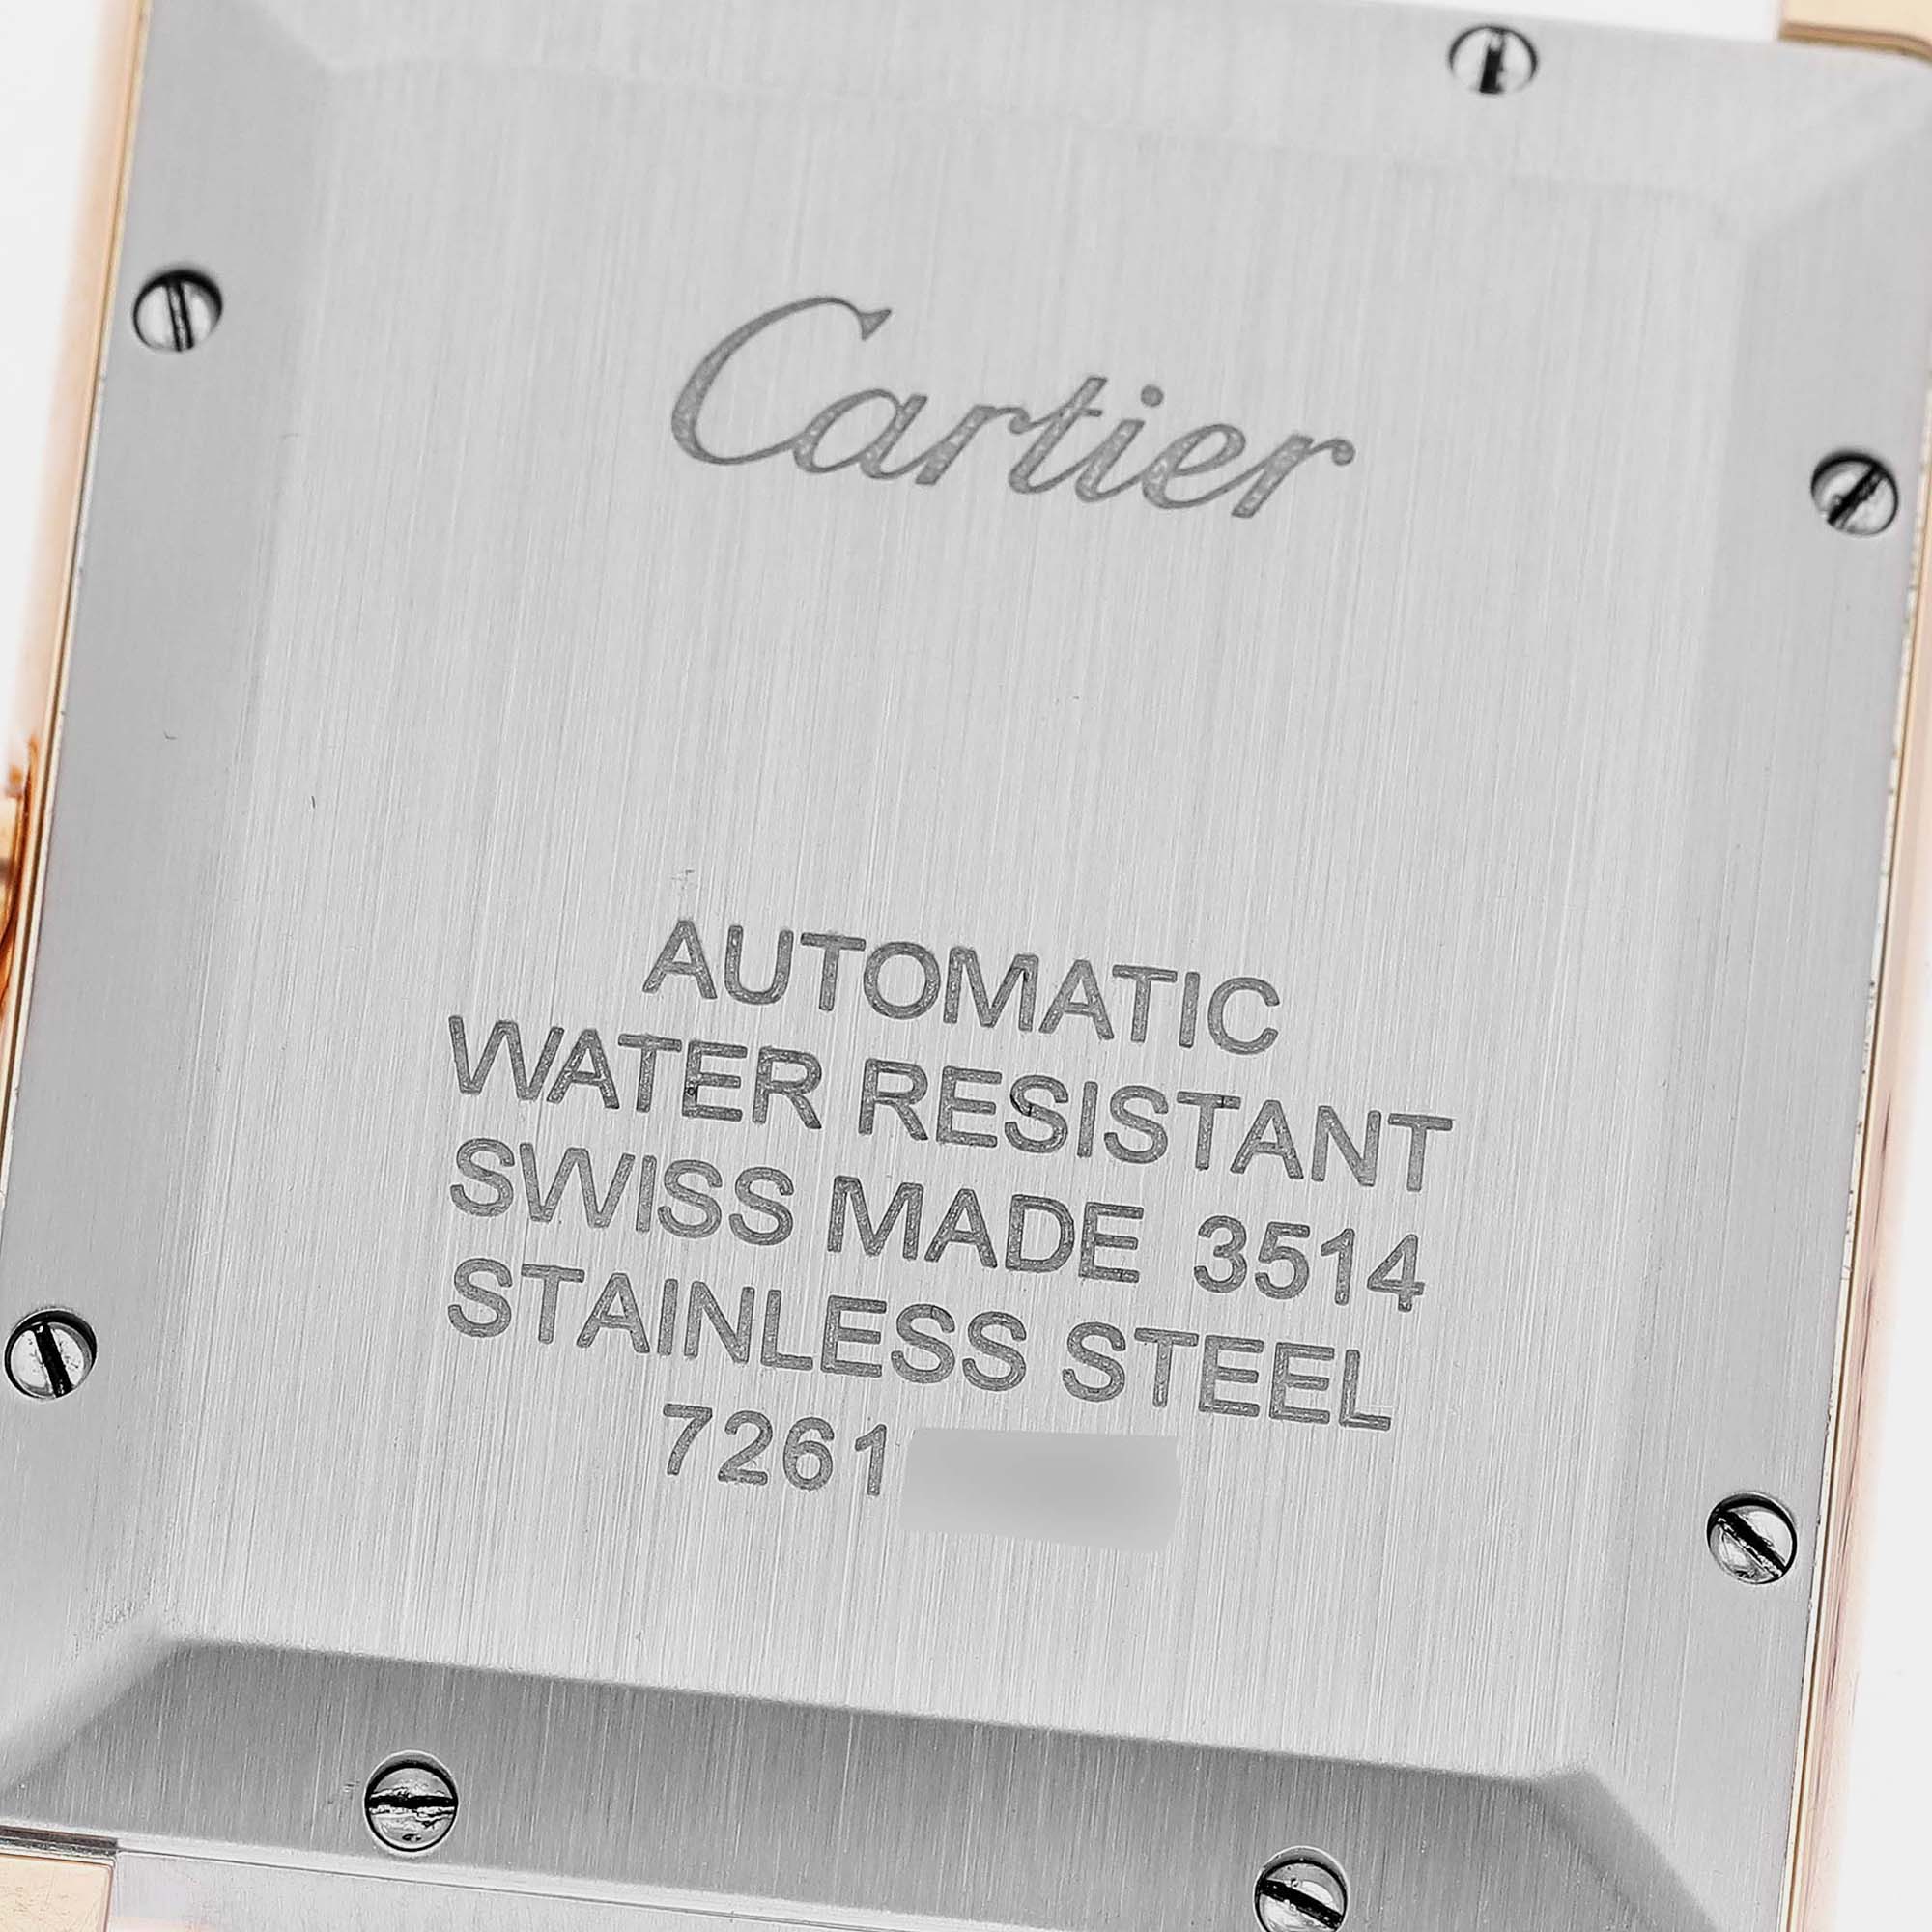 Cartier Tank Solo XL Rose Gold Silver Dial Men's Watch W5200026 31 X 41 Mm